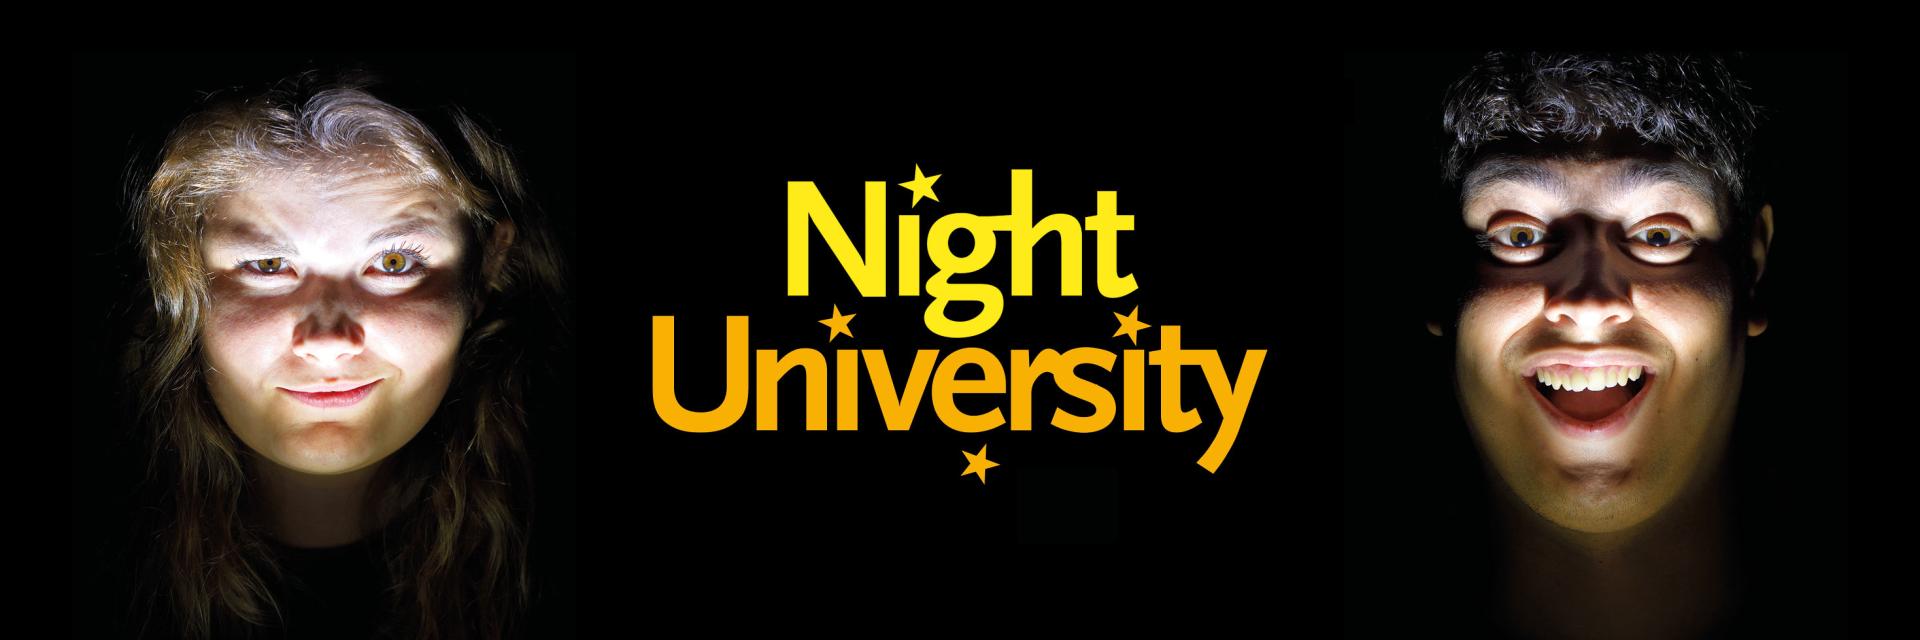 Night University